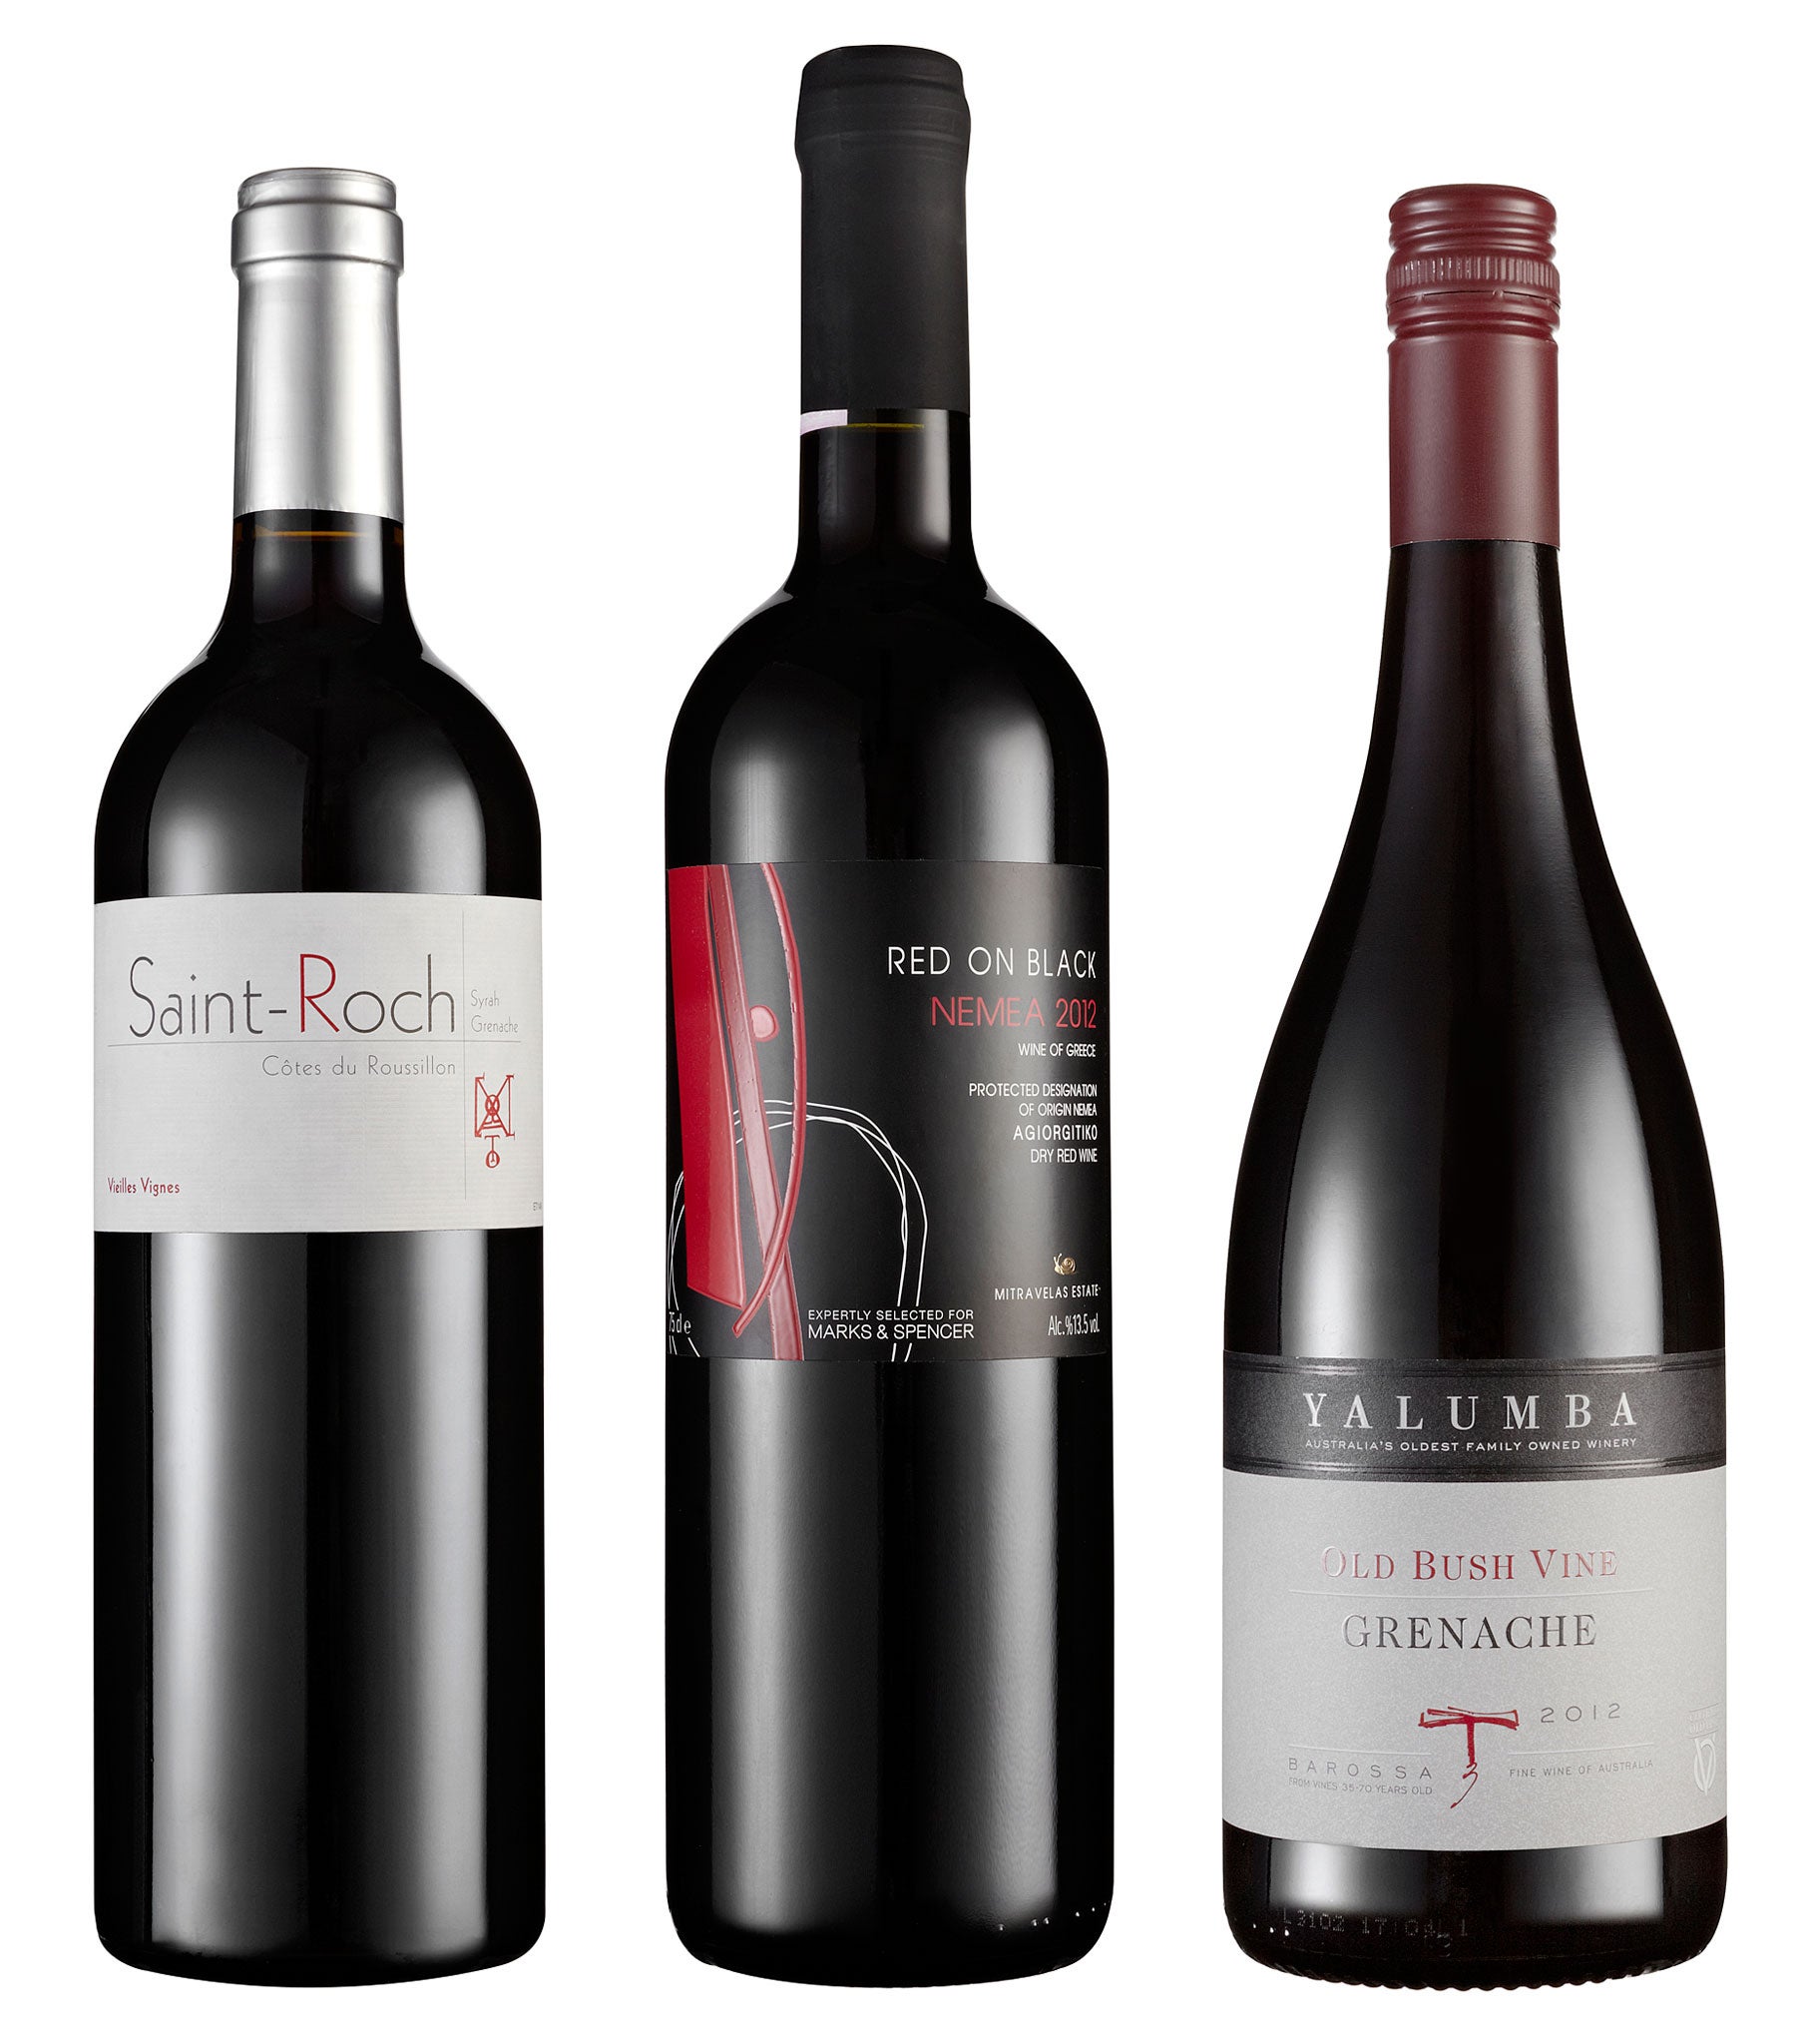 Saint-Roch Côtes Du Roussillon 2012; Red and Black Agiorgitiko Nemea 2012; Old Bush Vine Grenache Yalumba 2012